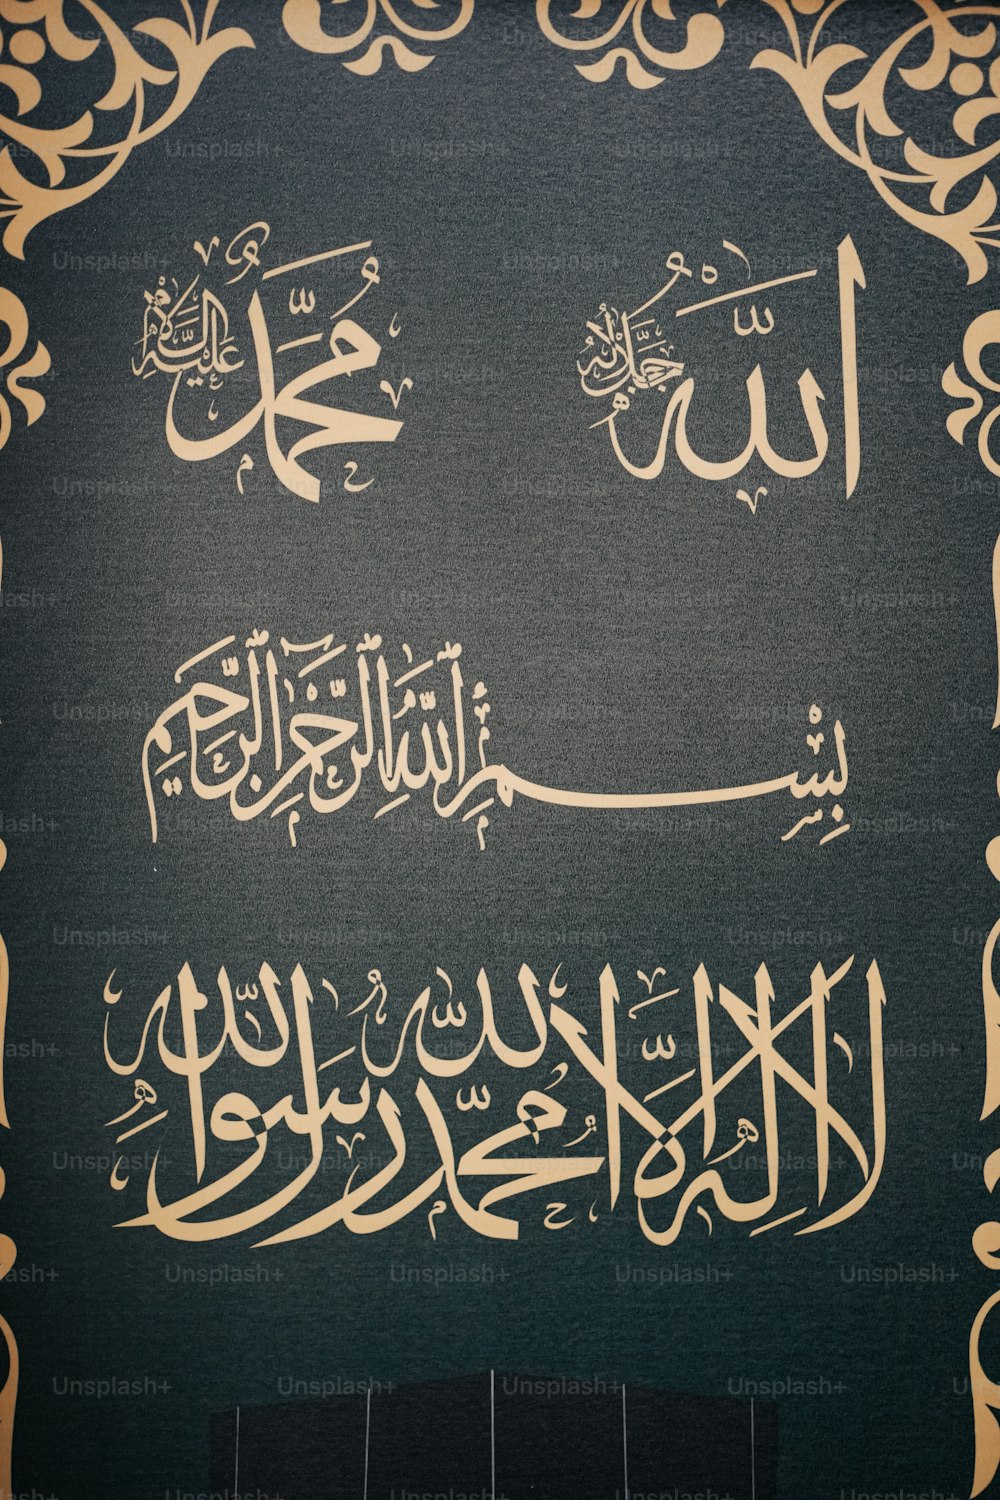 Un'immagine di scrittura araba su un muro